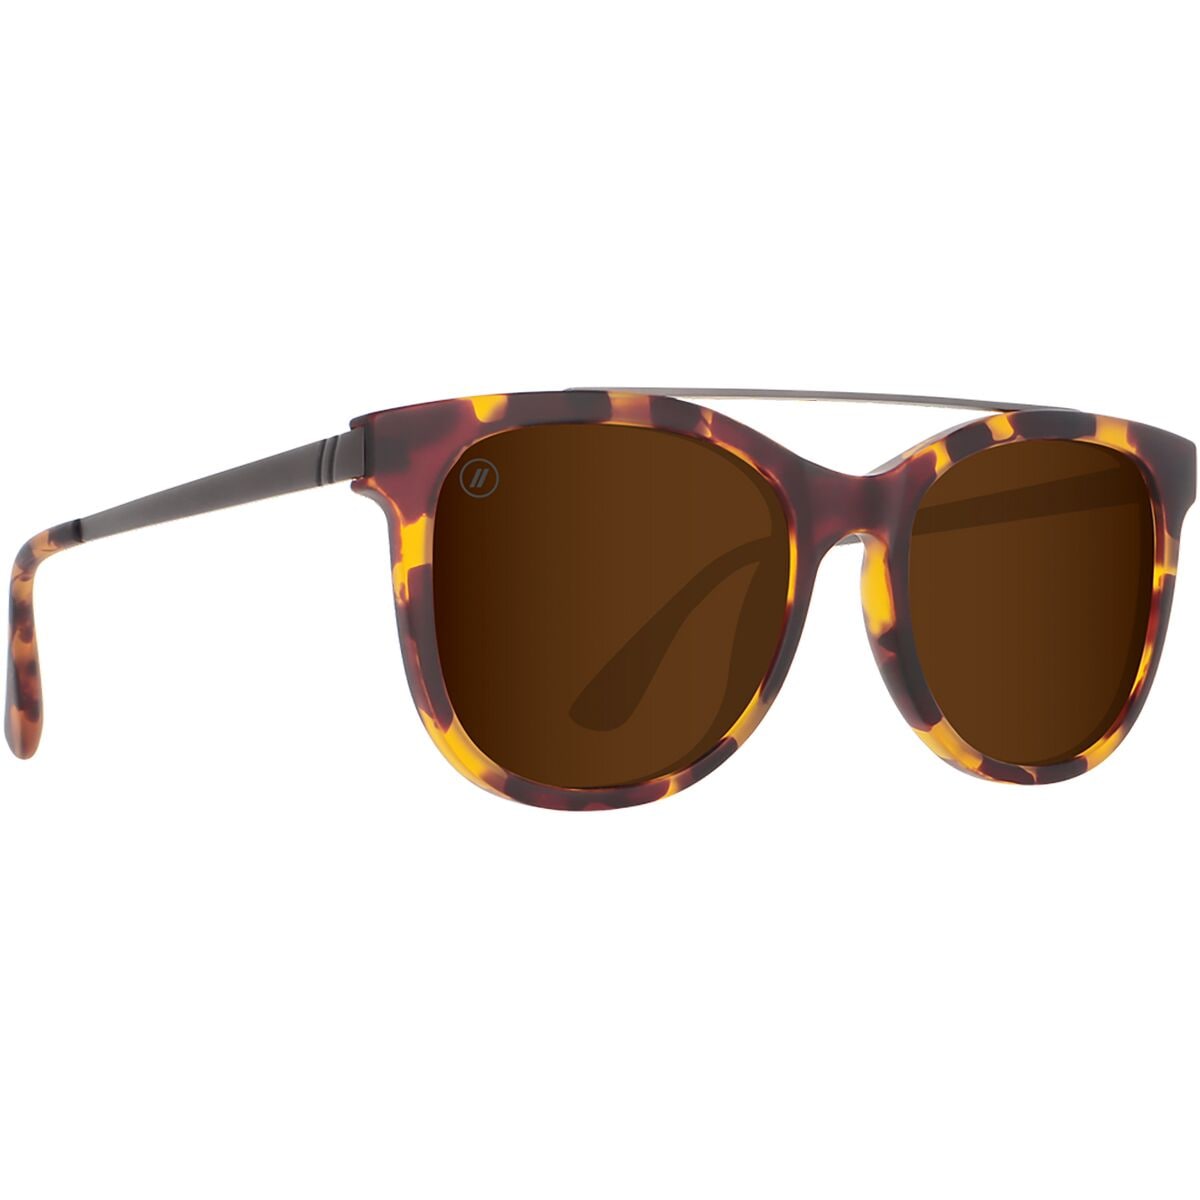 Blenders Eyewear Grand Brandy Balboa Polarized Sunglasses